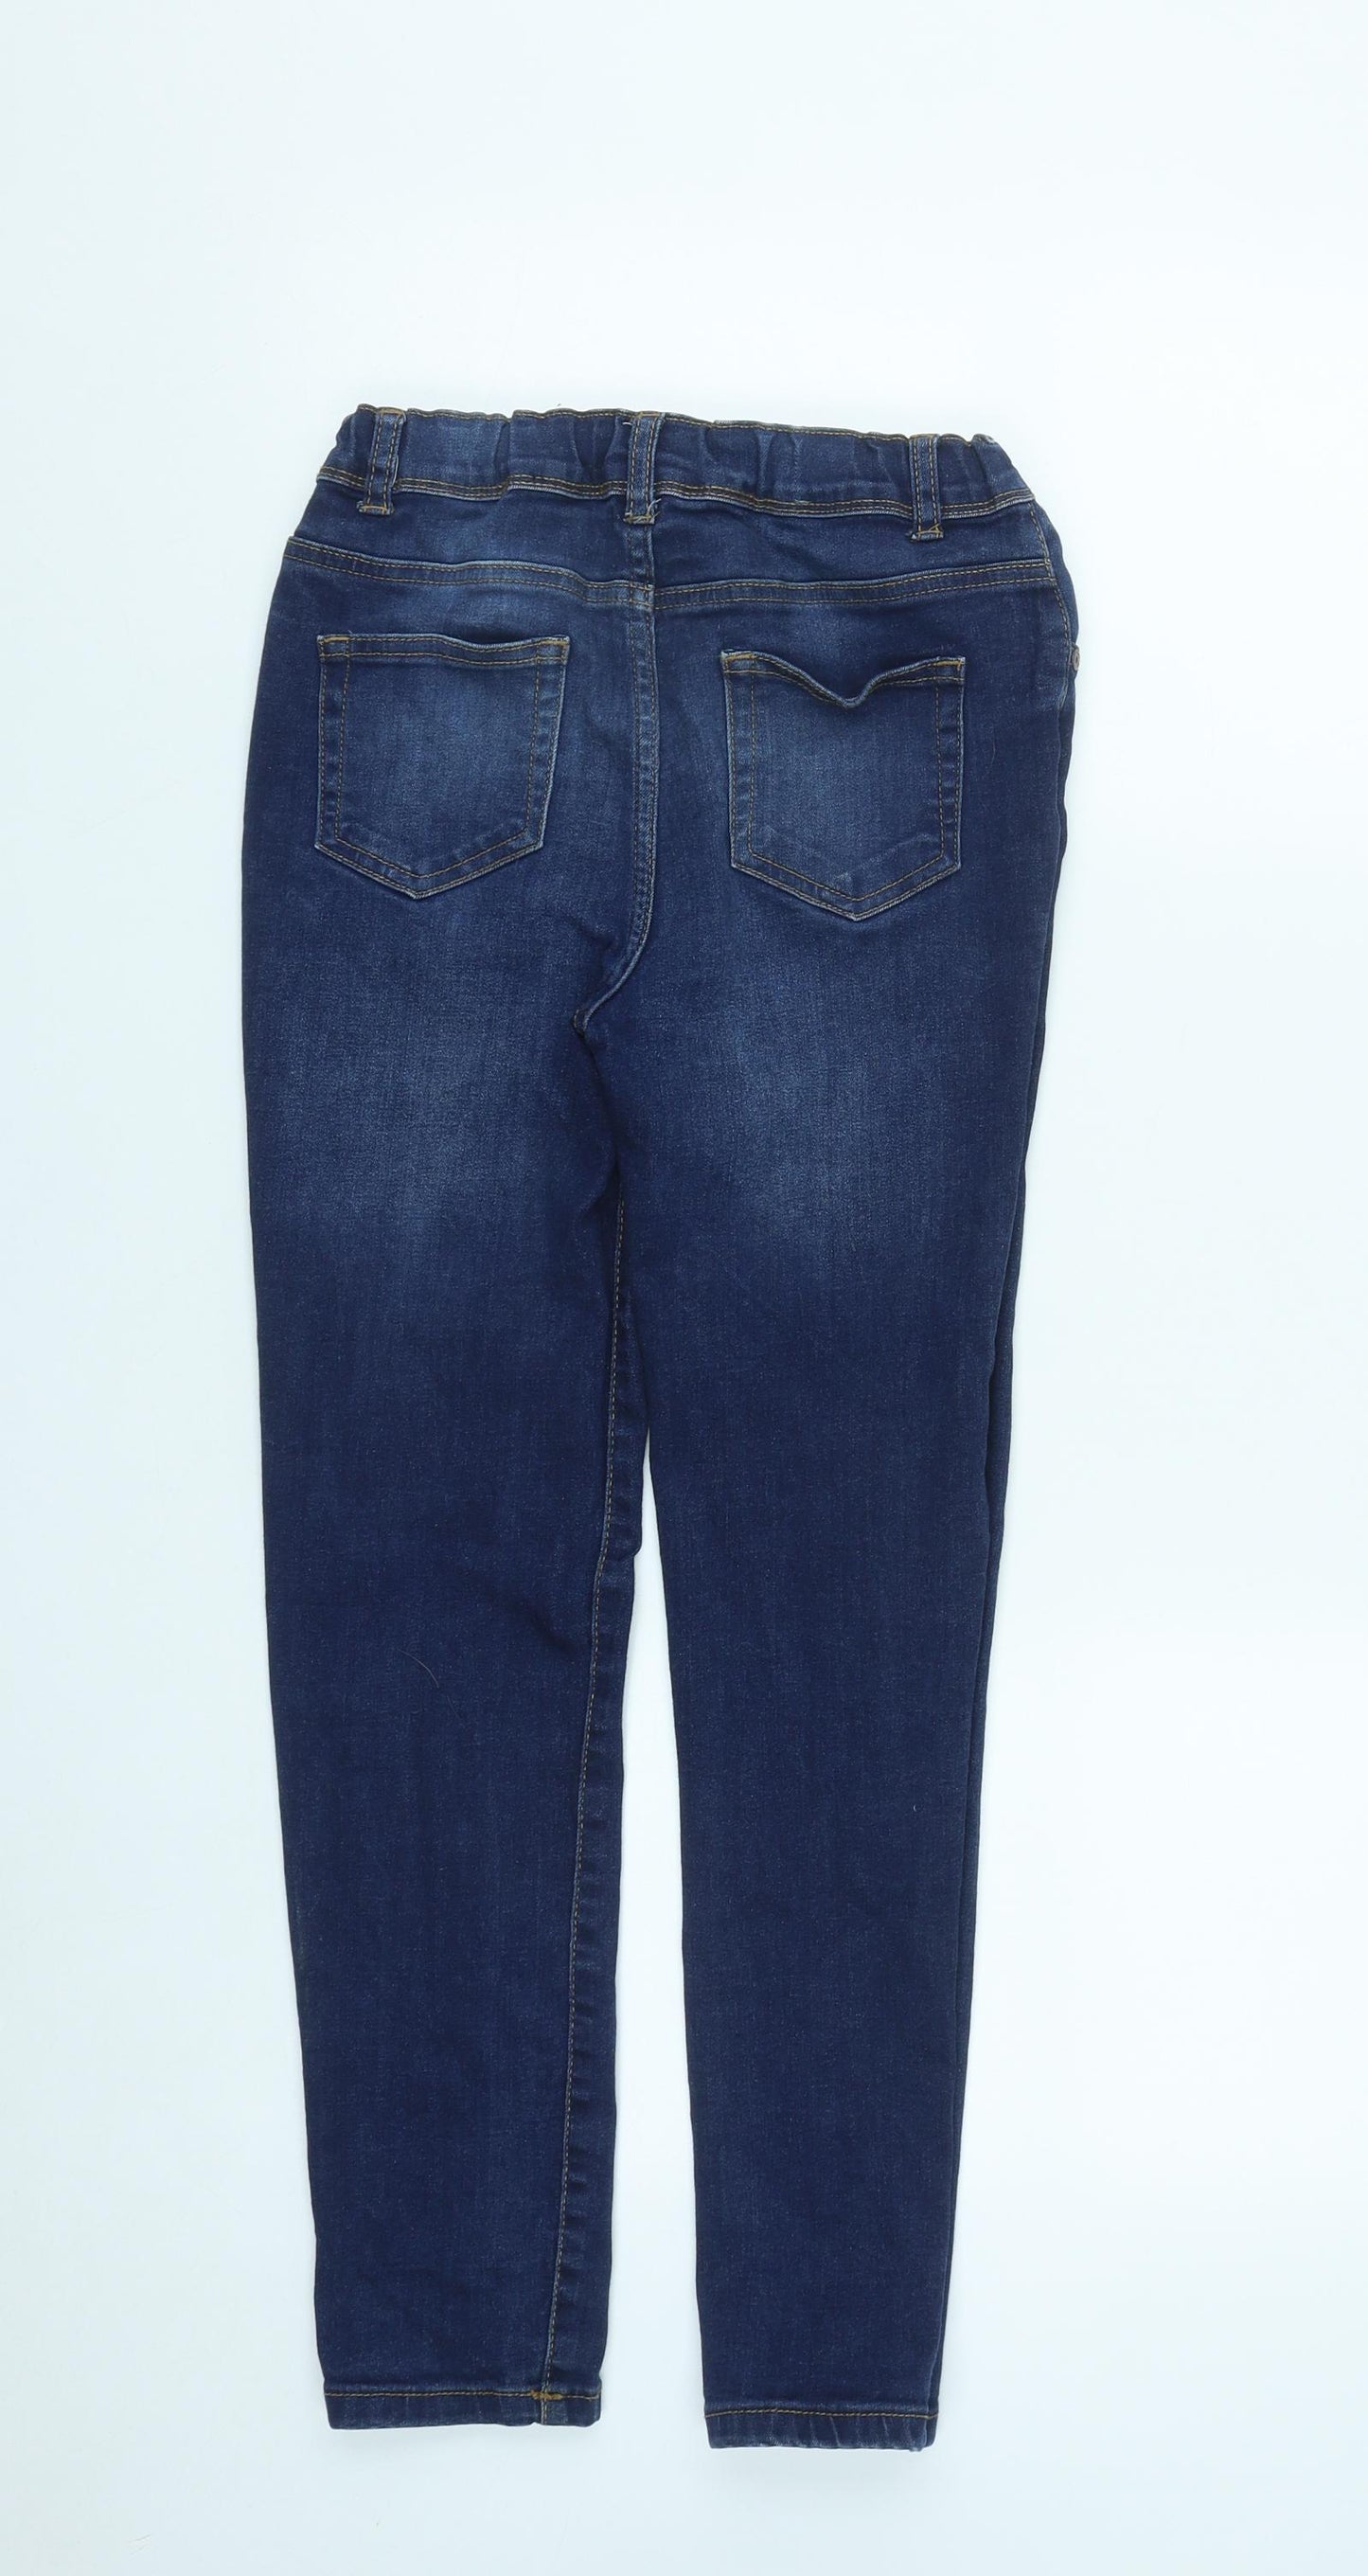 Denim & Co. Girls Blue  Cotton Skinny Jeans Size 11-12 Years  Regular